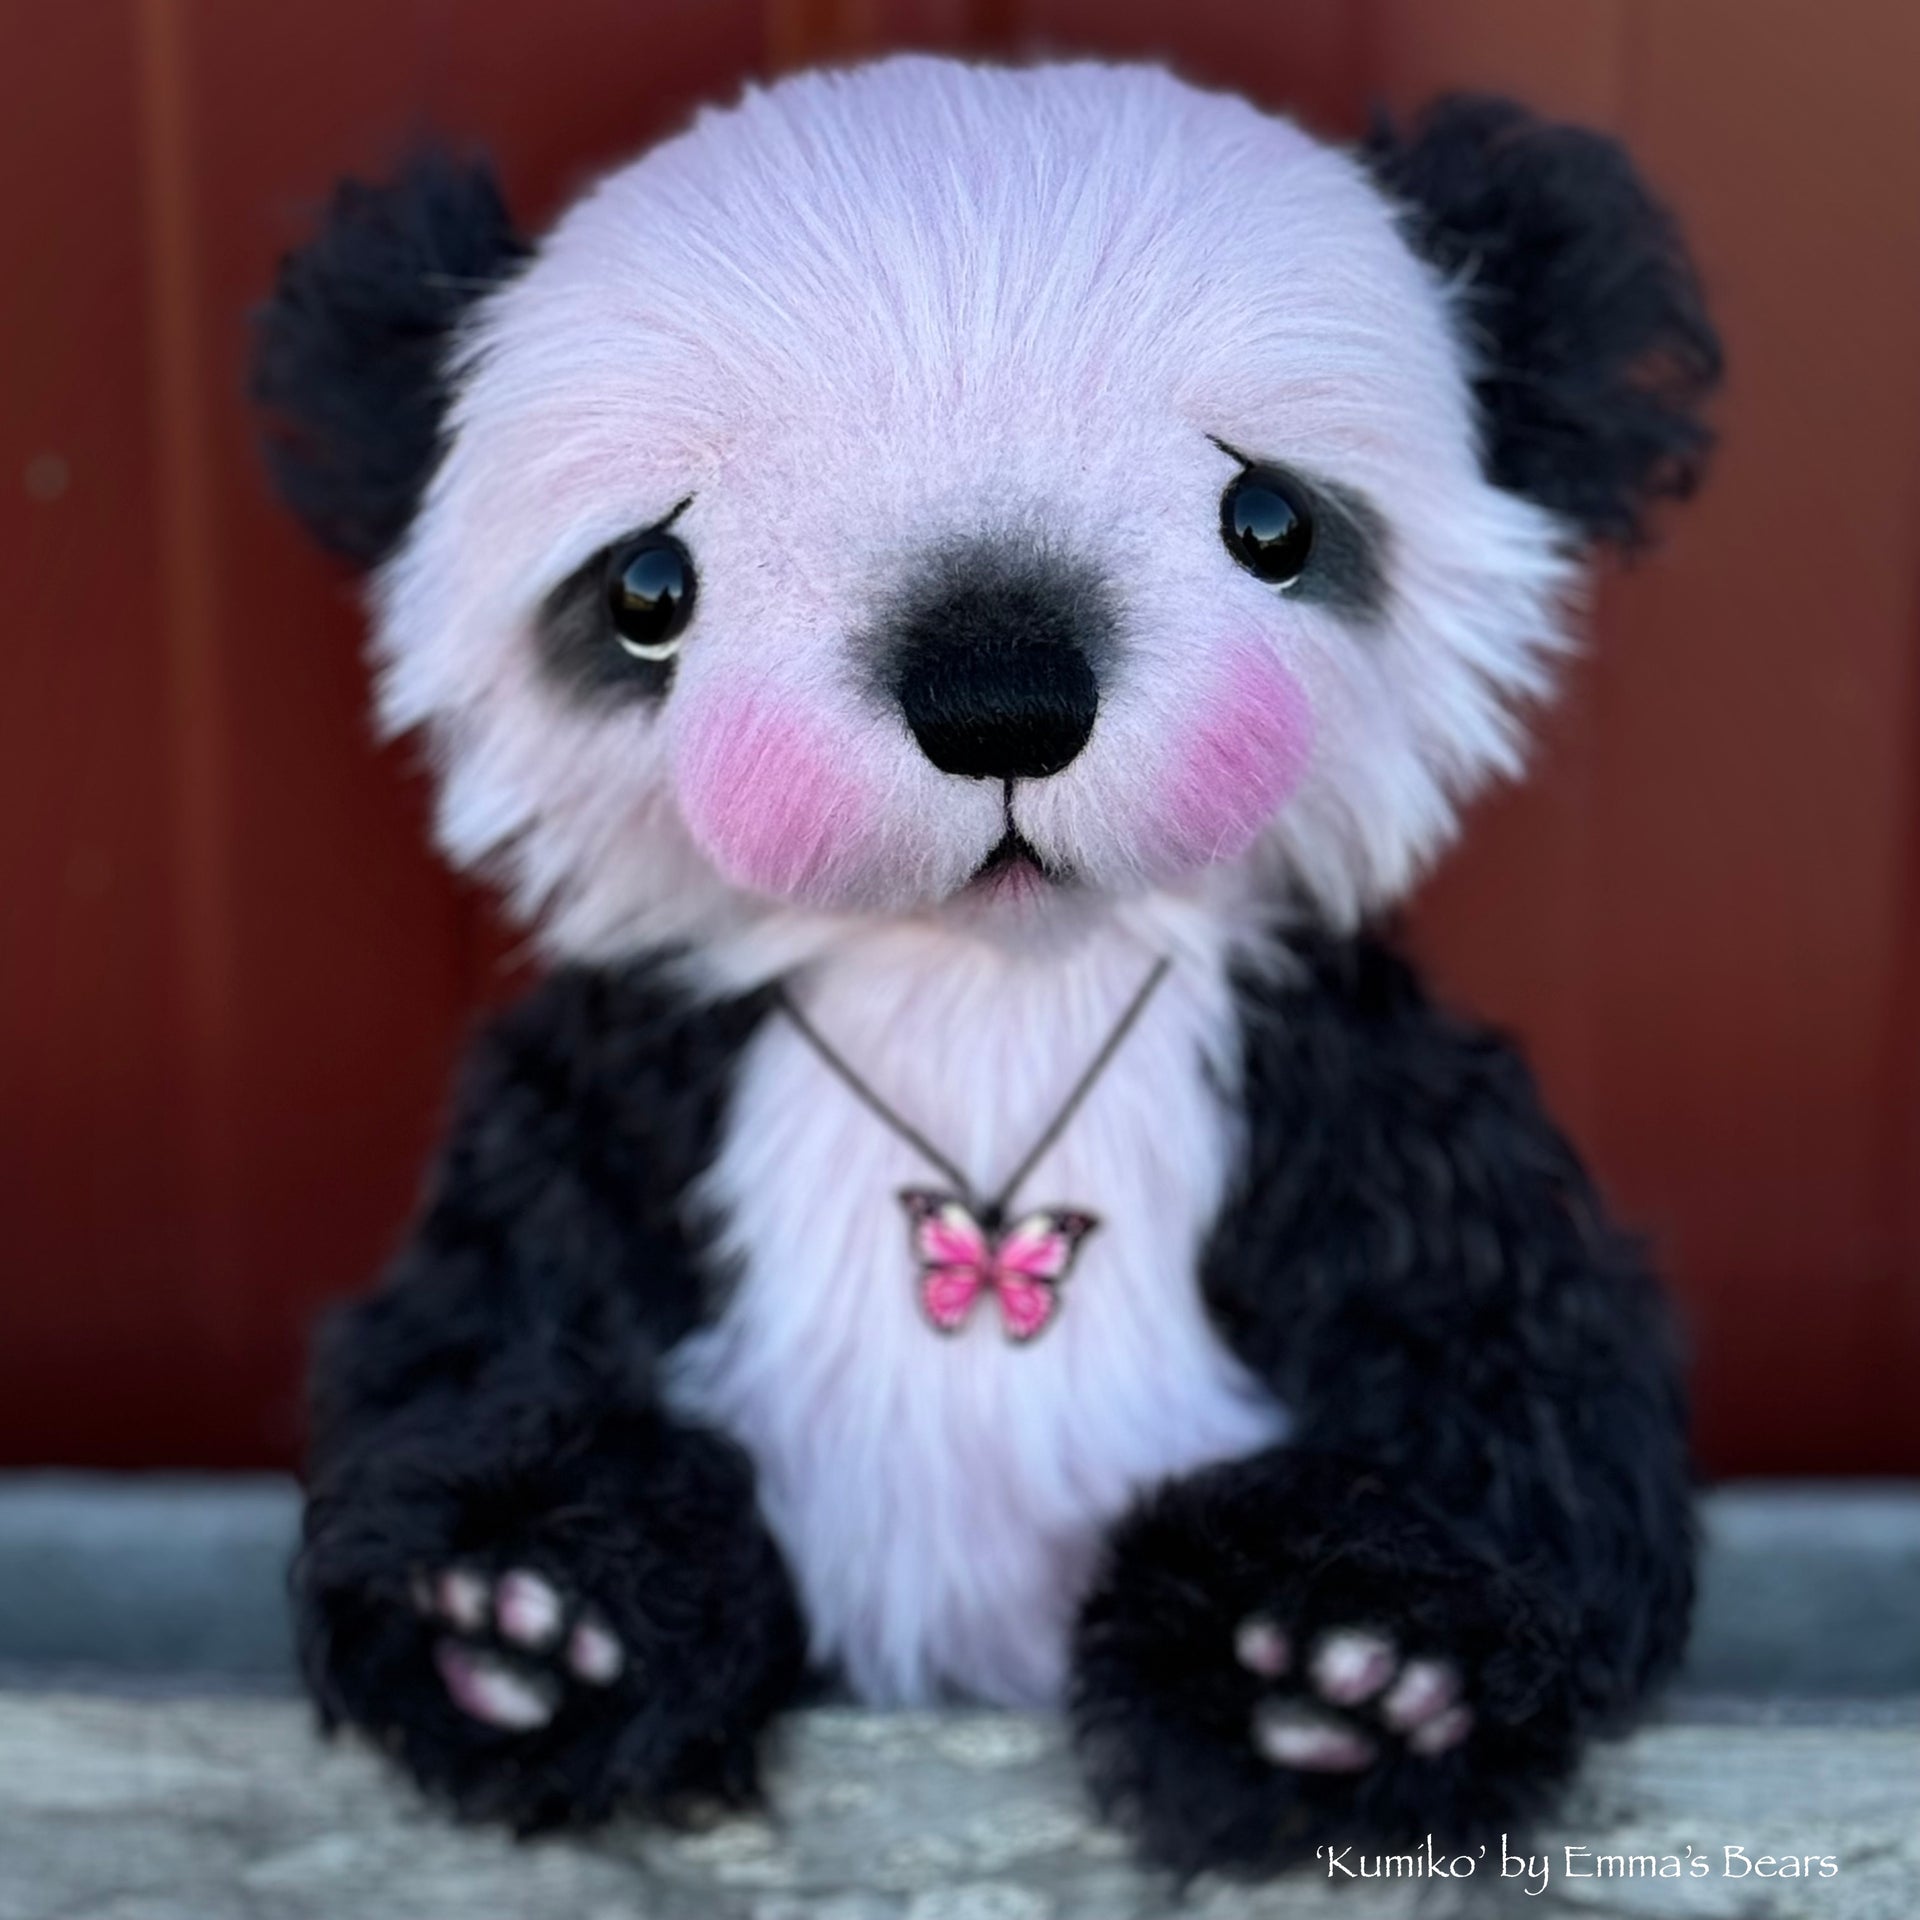 KITS - 7" Kumiko kid mohair and faux fur artist bear